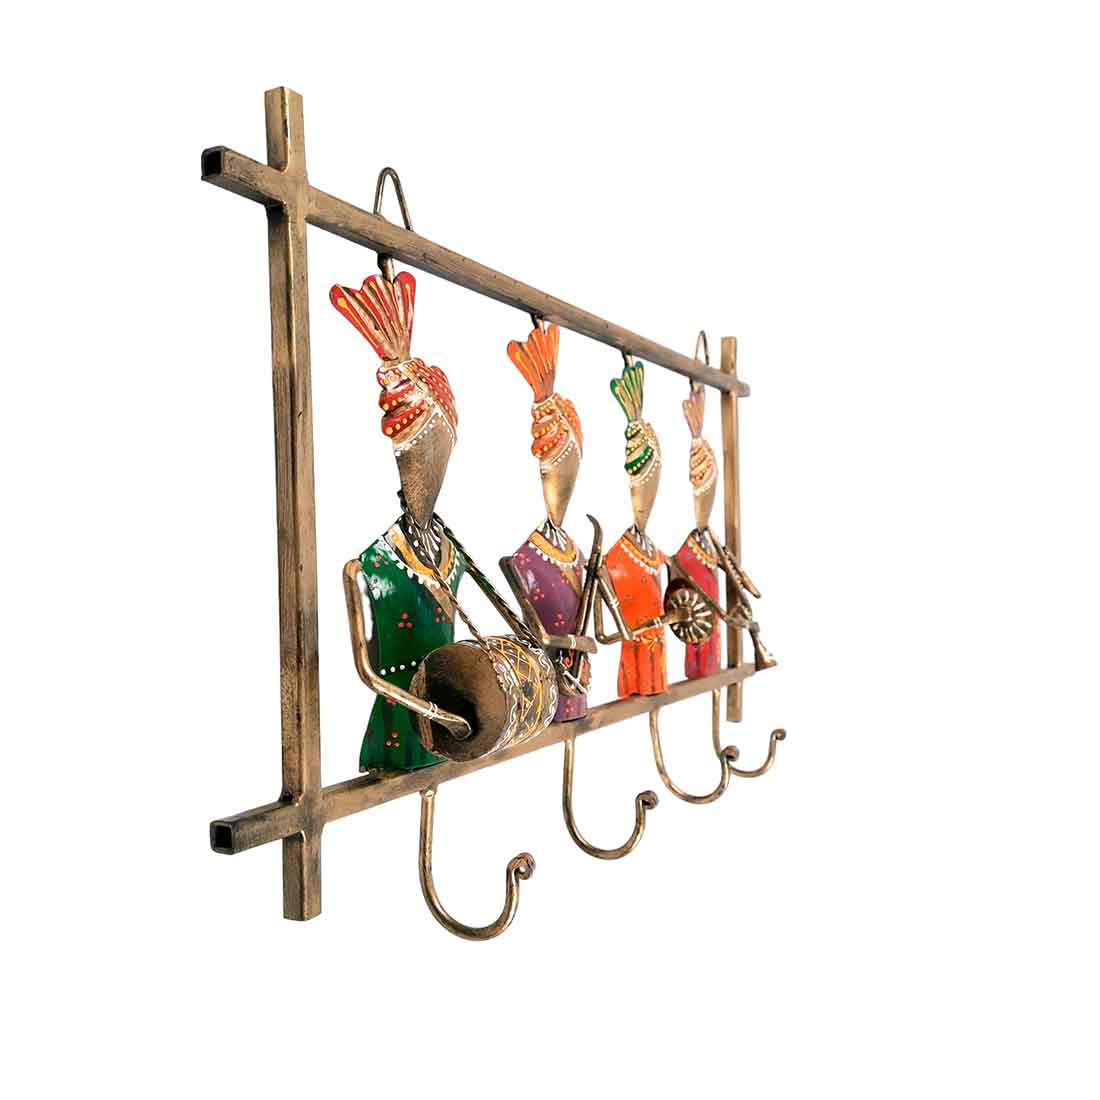 Decorative Key Hook -12 Inch- Apkamart